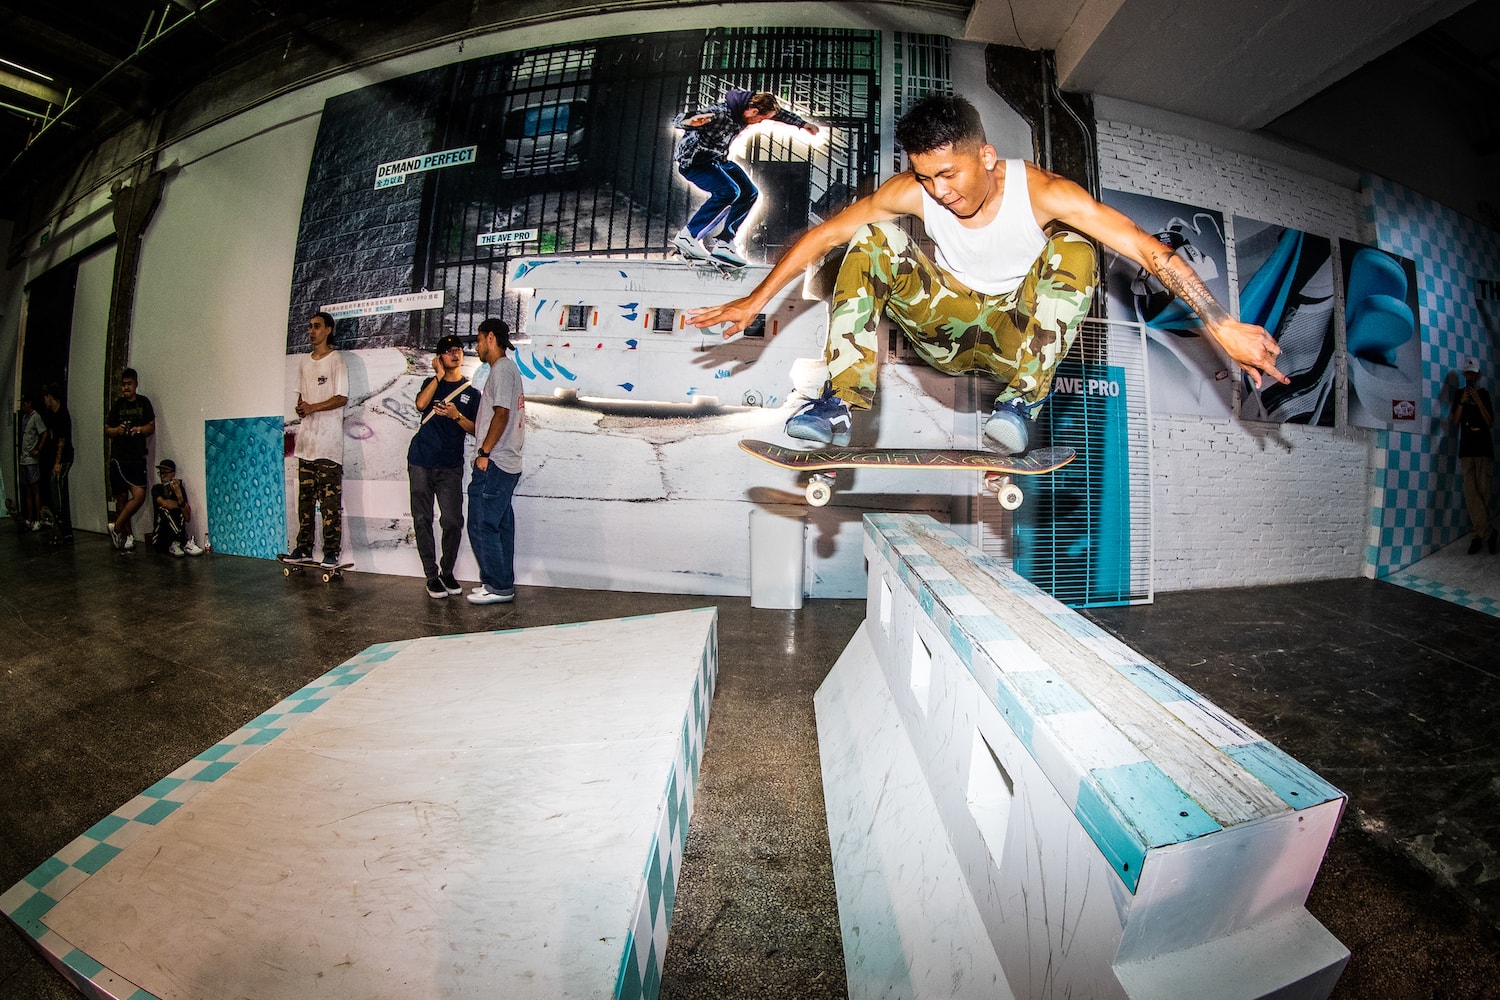 Vans Pro Skate 全新 AVE PRO 簽名滑板鞋體驗活動回顧